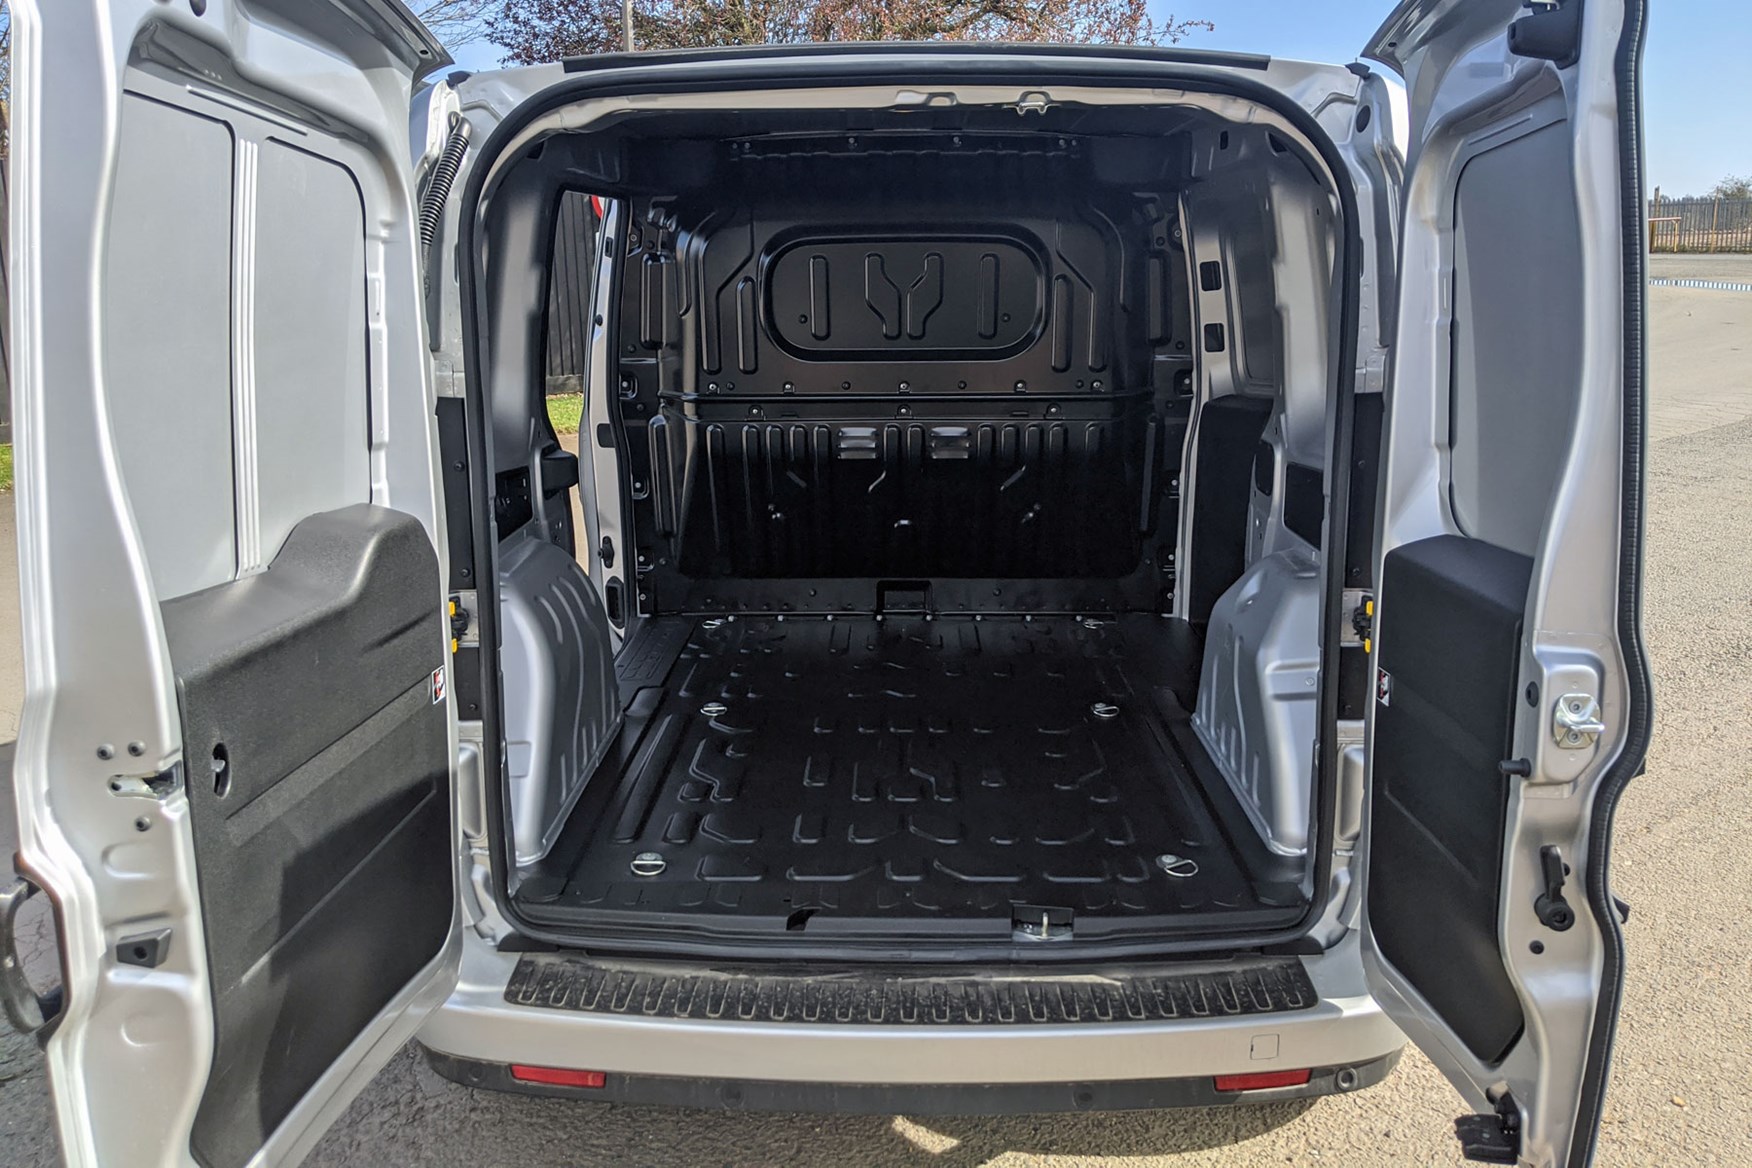 Fiat Doblo review - load area, 2020